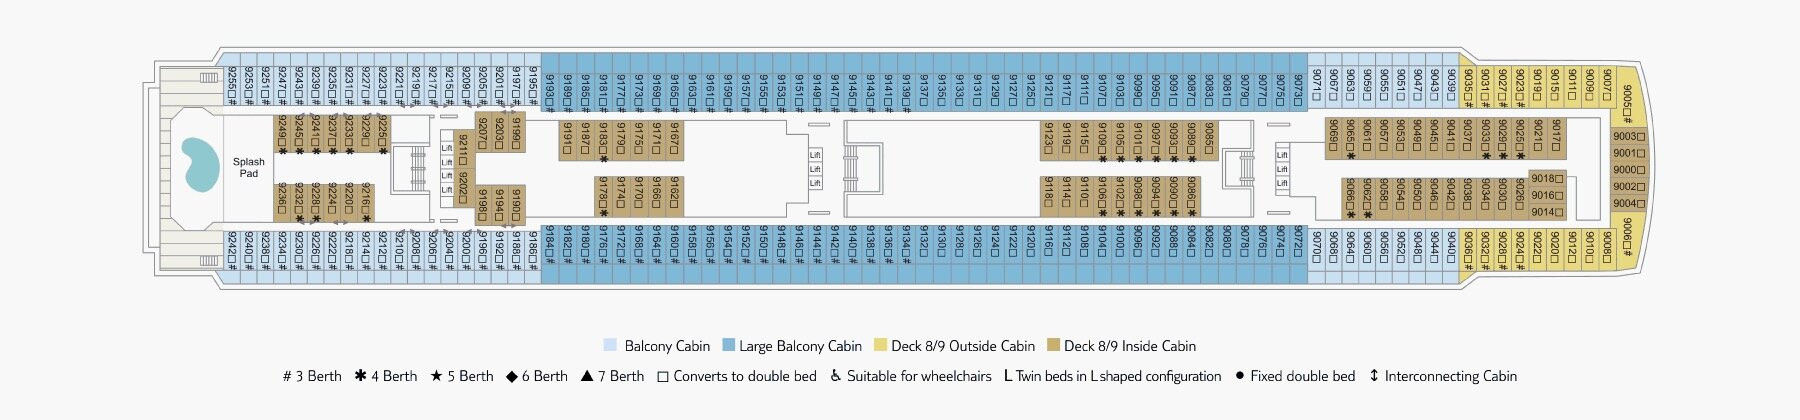 1548636452.4853_d294_Thomson Cruises TUI Explorer Deck Plans Deck 9.jpg